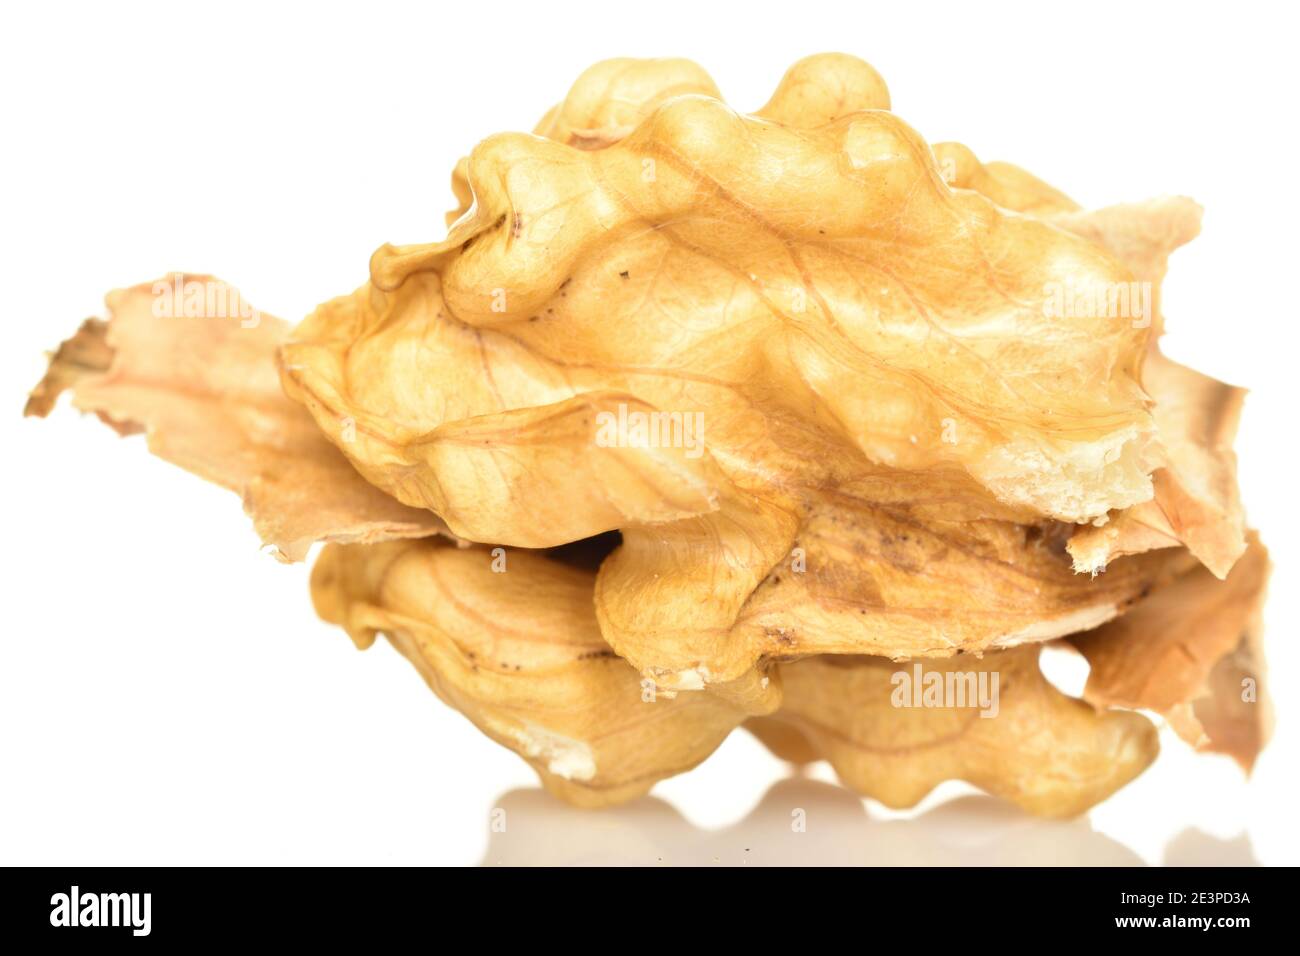 One light yellow ripe tasty peeled walnut kernel, macro, on a white background. Stock Photo